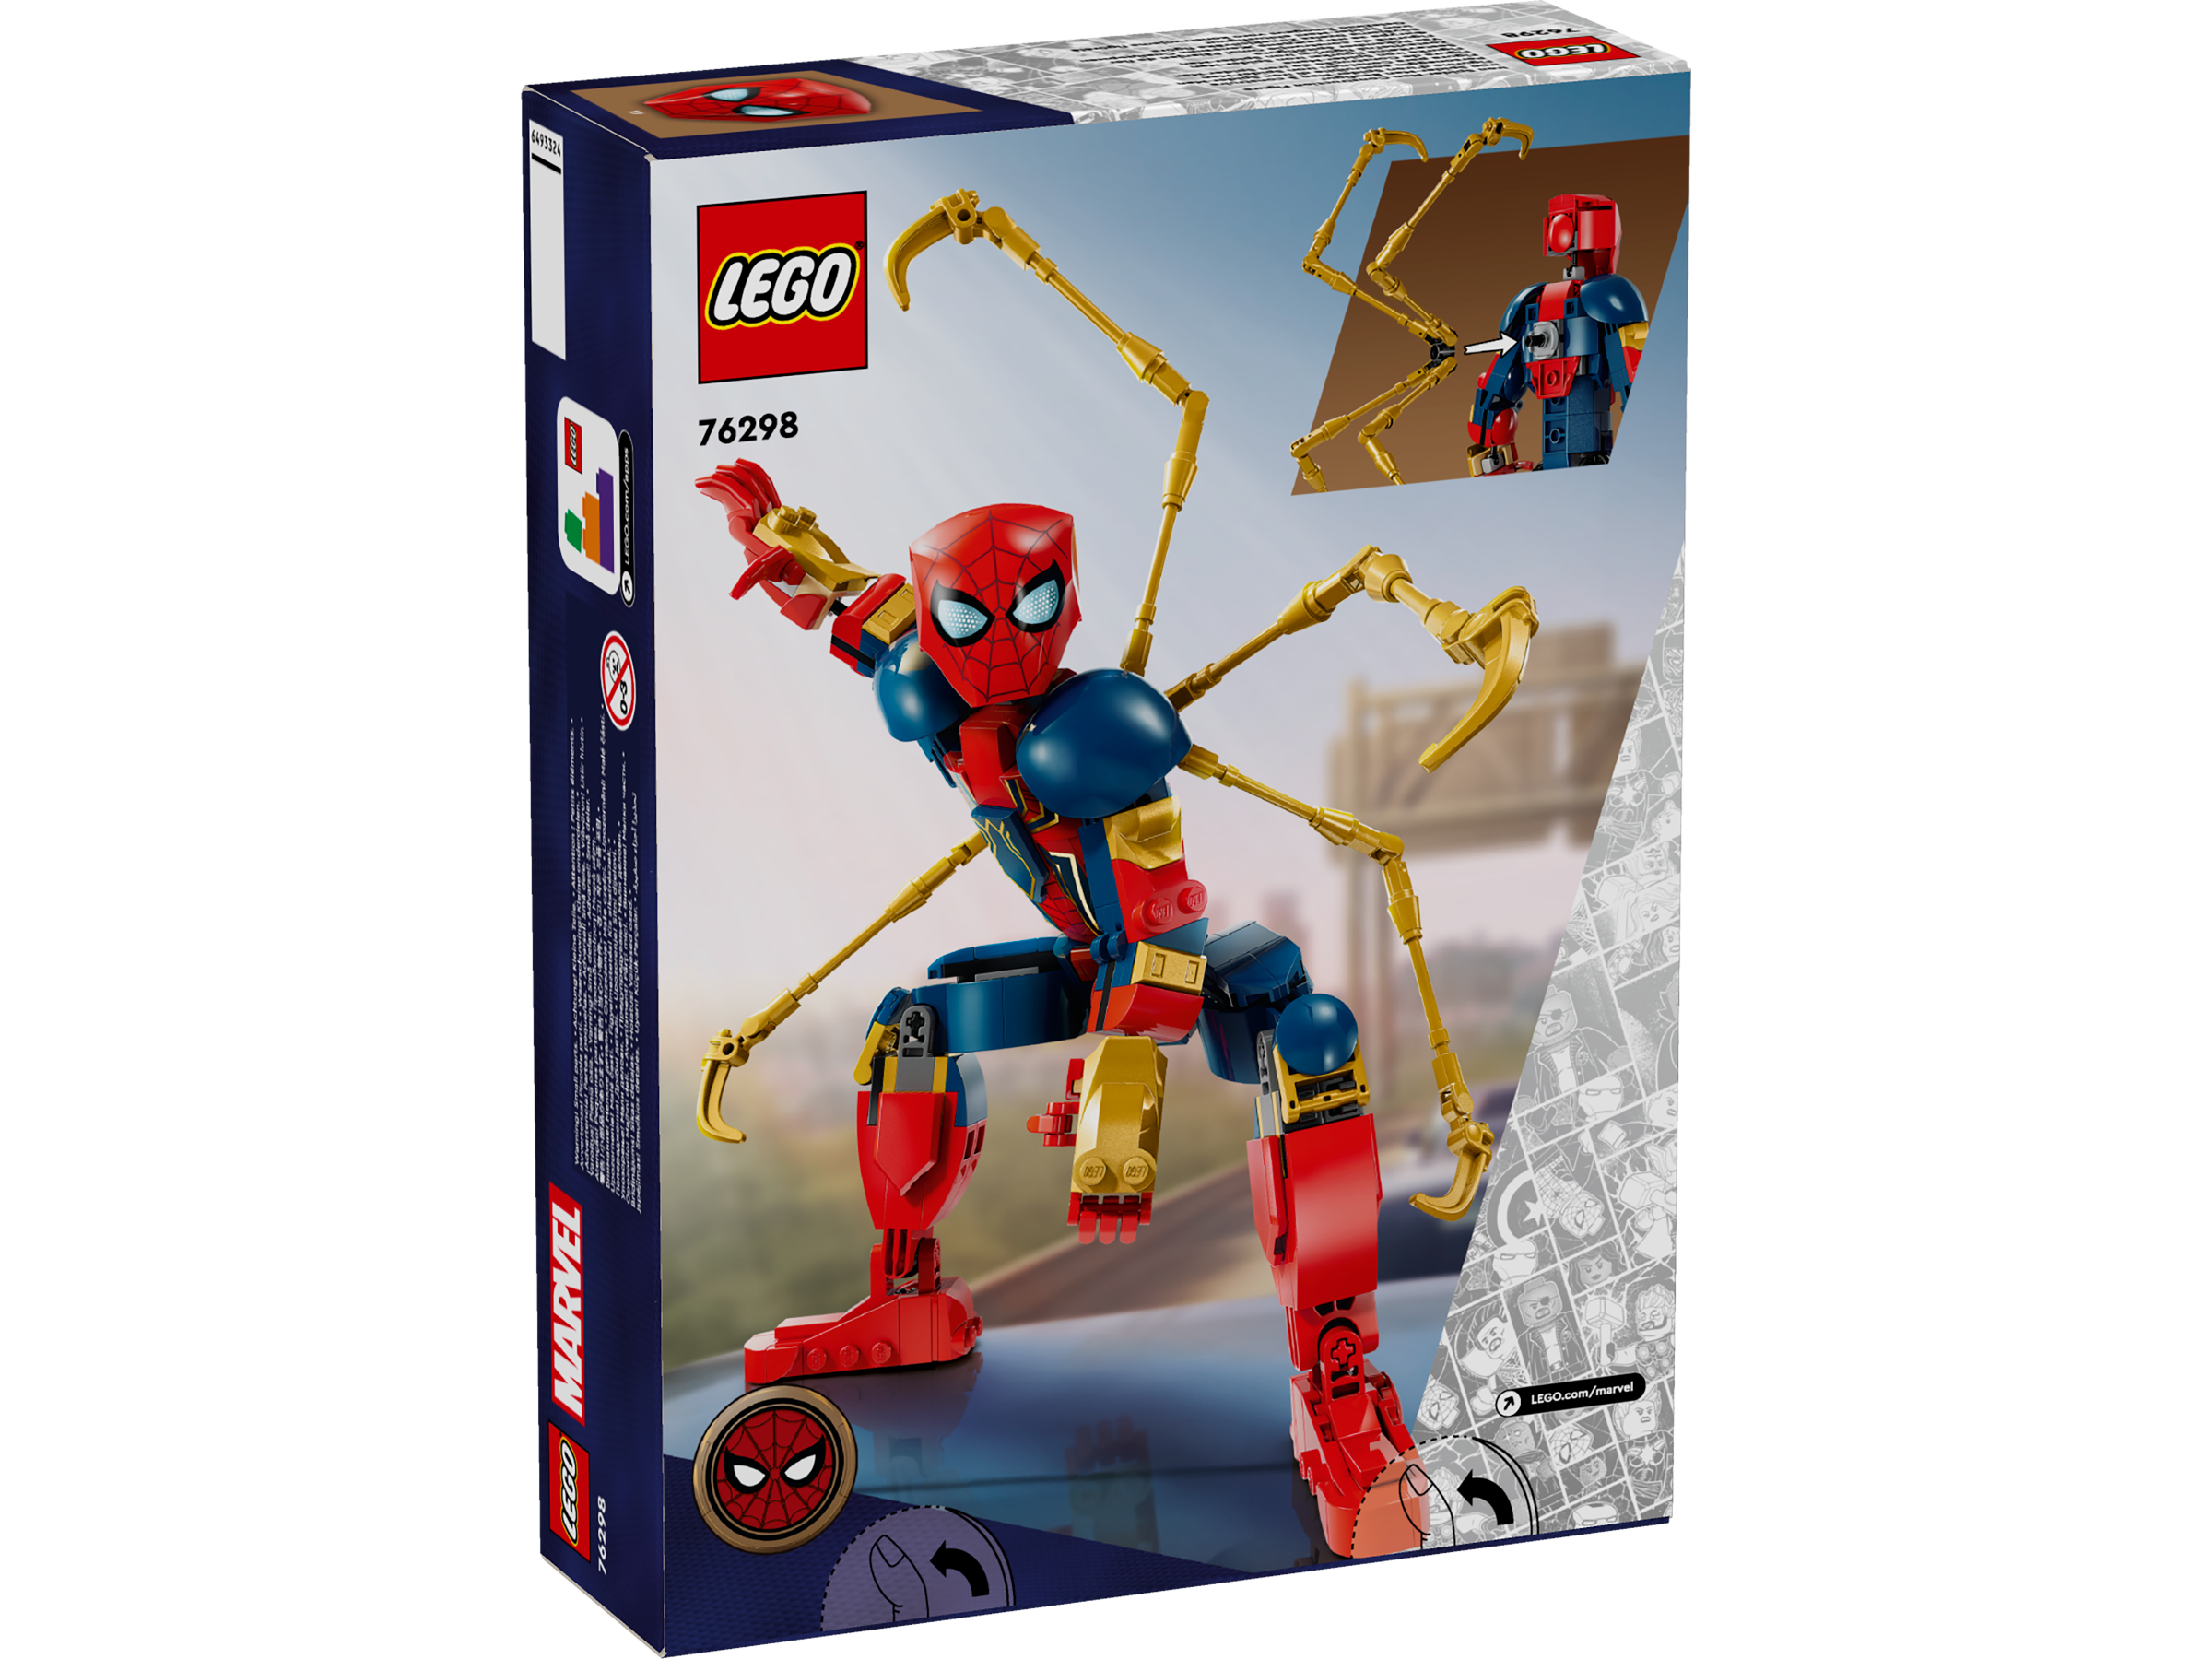 LEGO® Marvel Super Heroes 76298 Iron Spider-Man Construction Figure